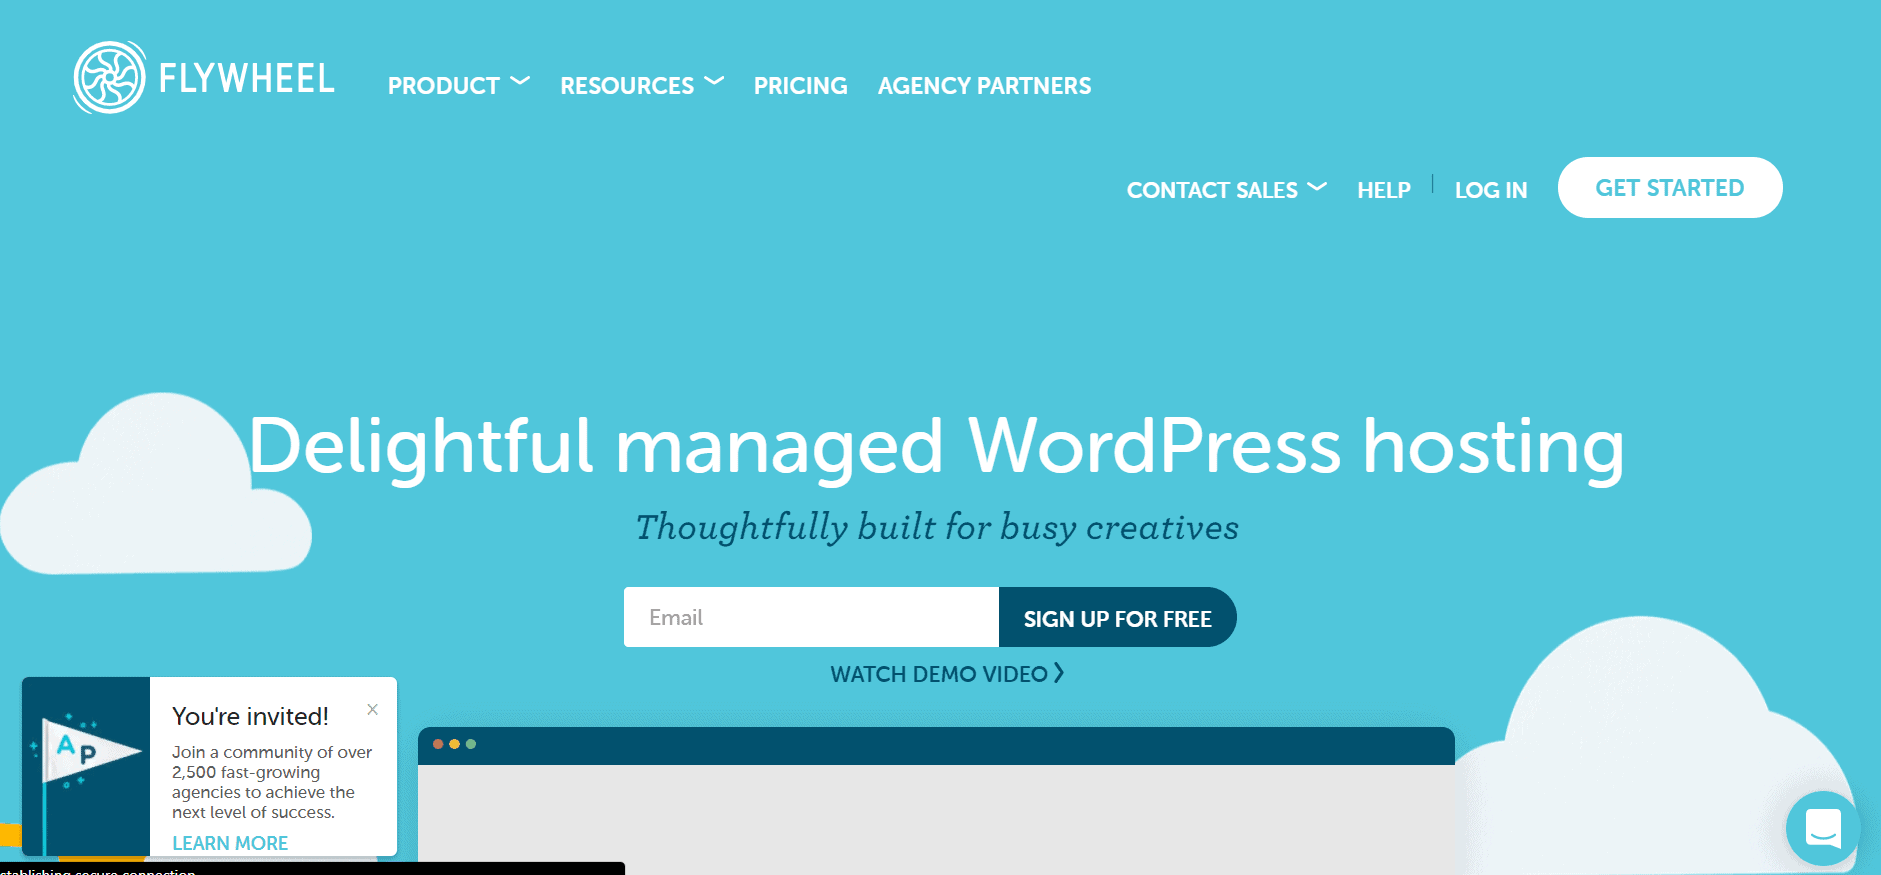 Best Managed WordPress Hosting - Flywheel overview